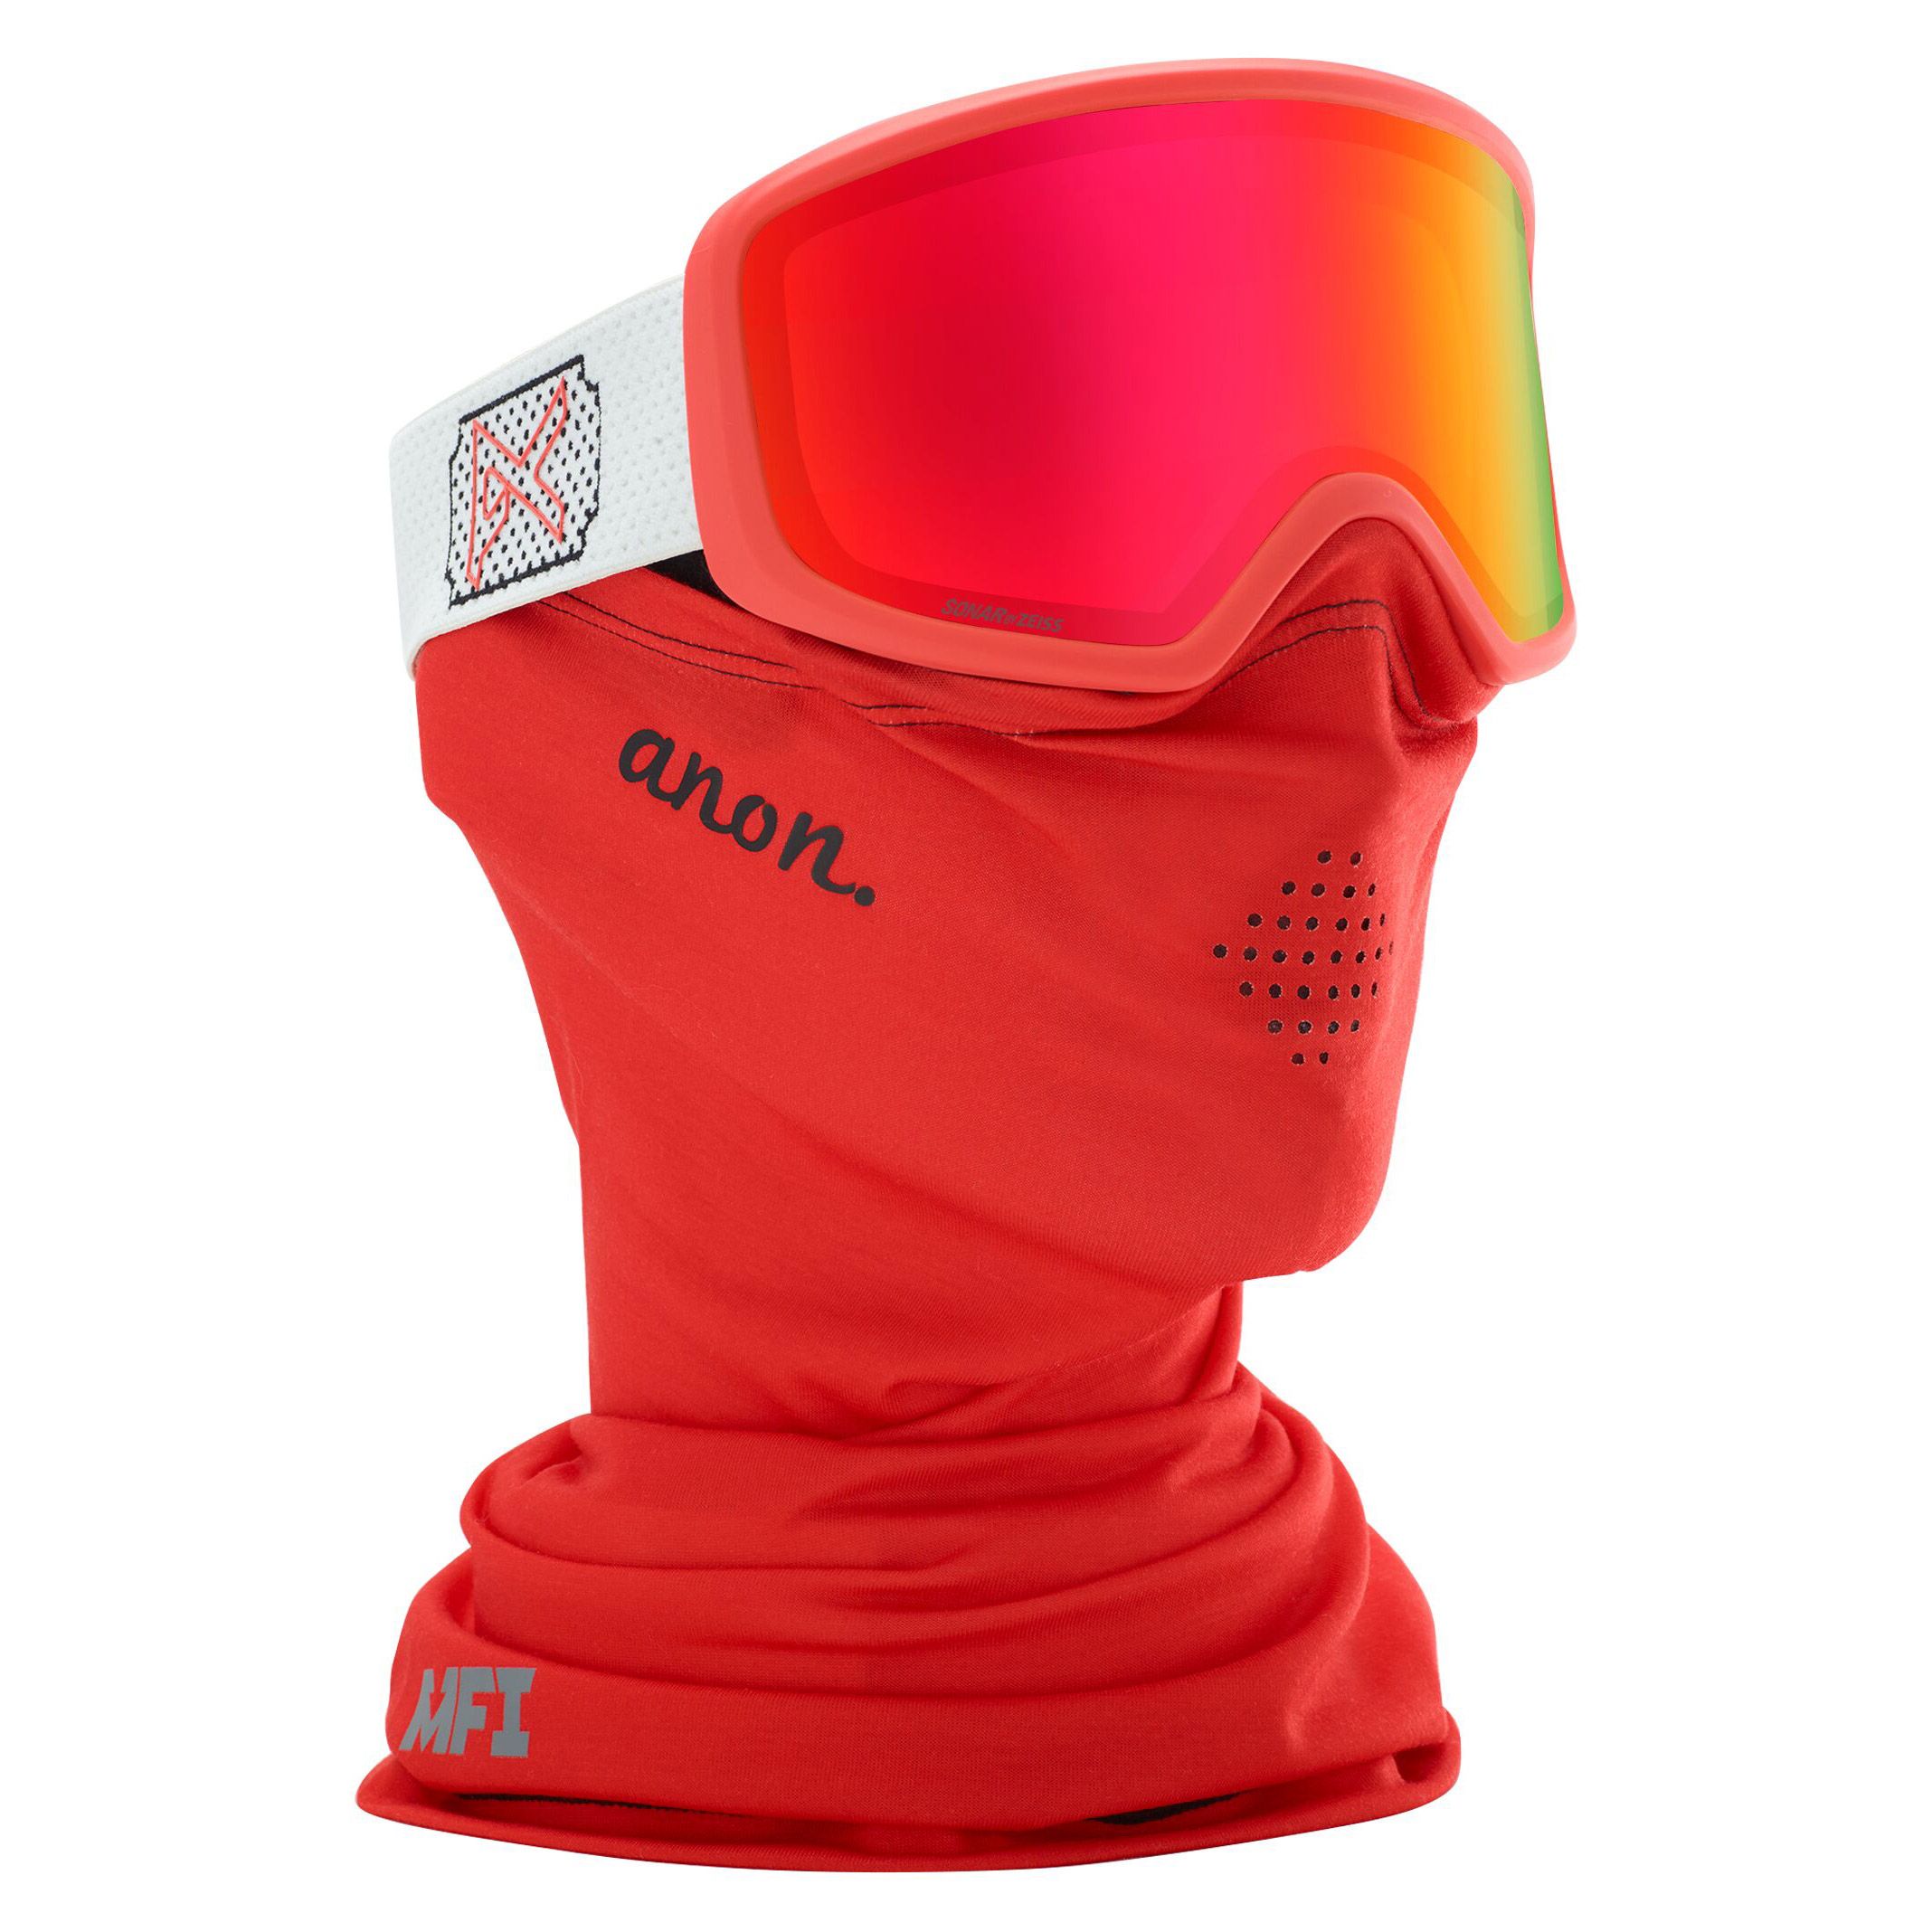 Masque de Ski Deringer MFI - White Rose - Sonar Red + Amber